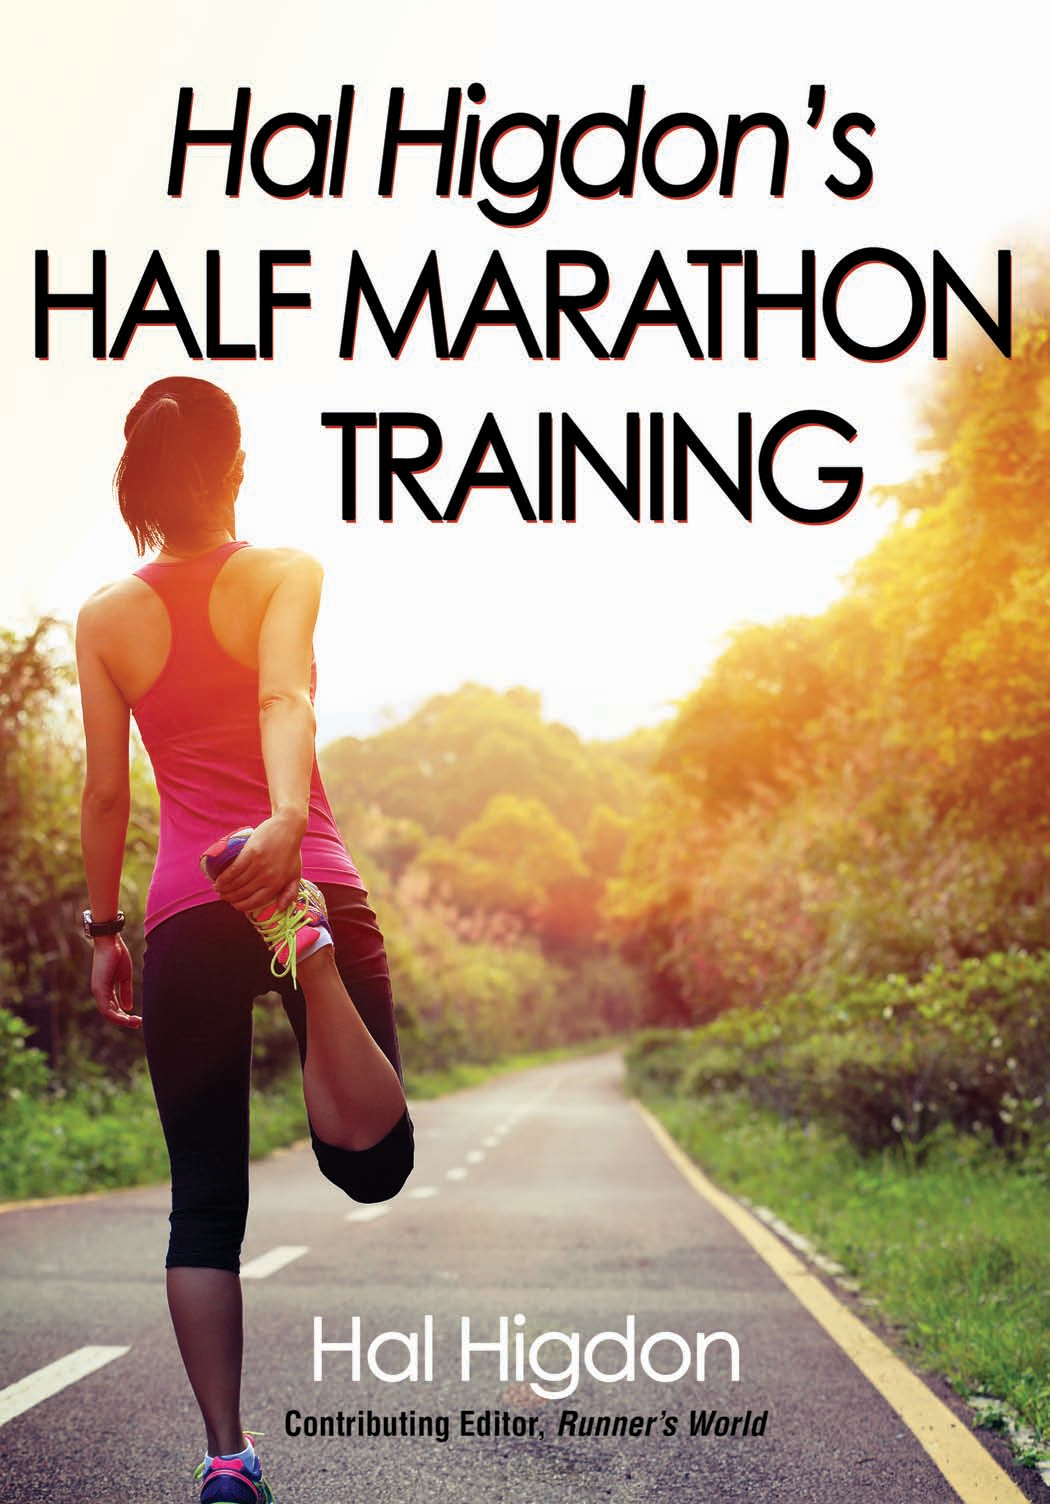 pdfcoffee higdon-hal-hal-higdonx27s-half-marathon-training-pdf-free image